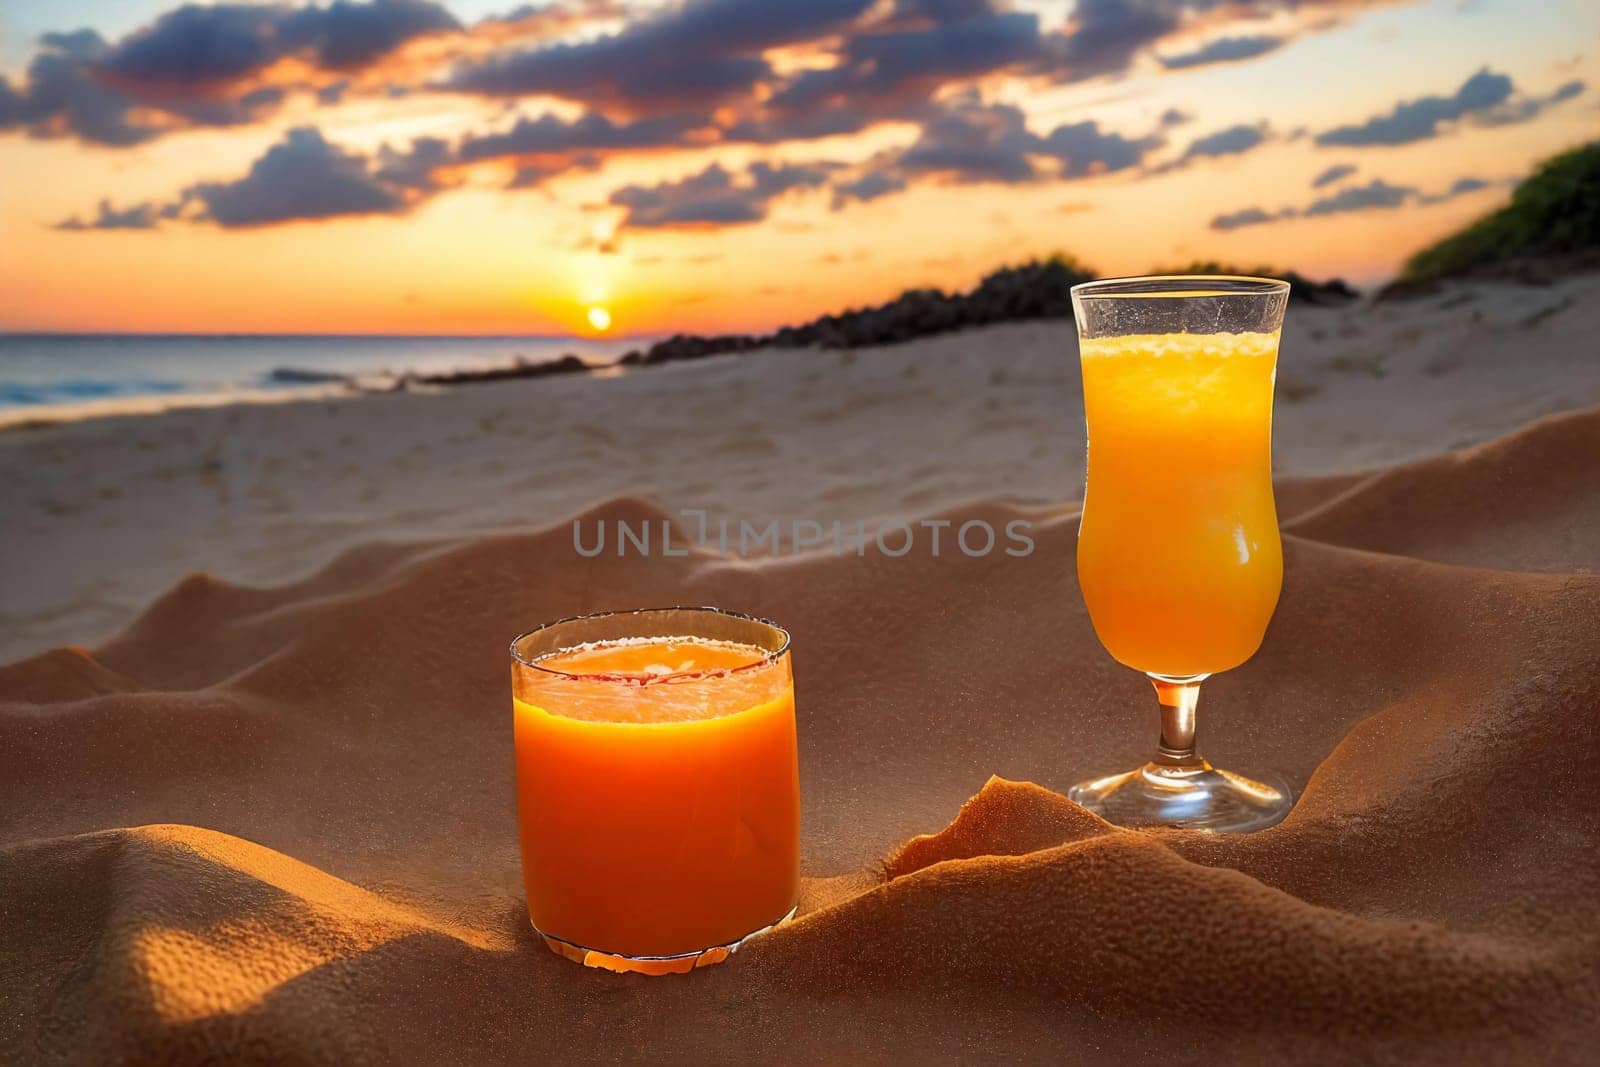 A refreshing glass of vibrant orange juice beside a ripe orange fruit on a sandy beach